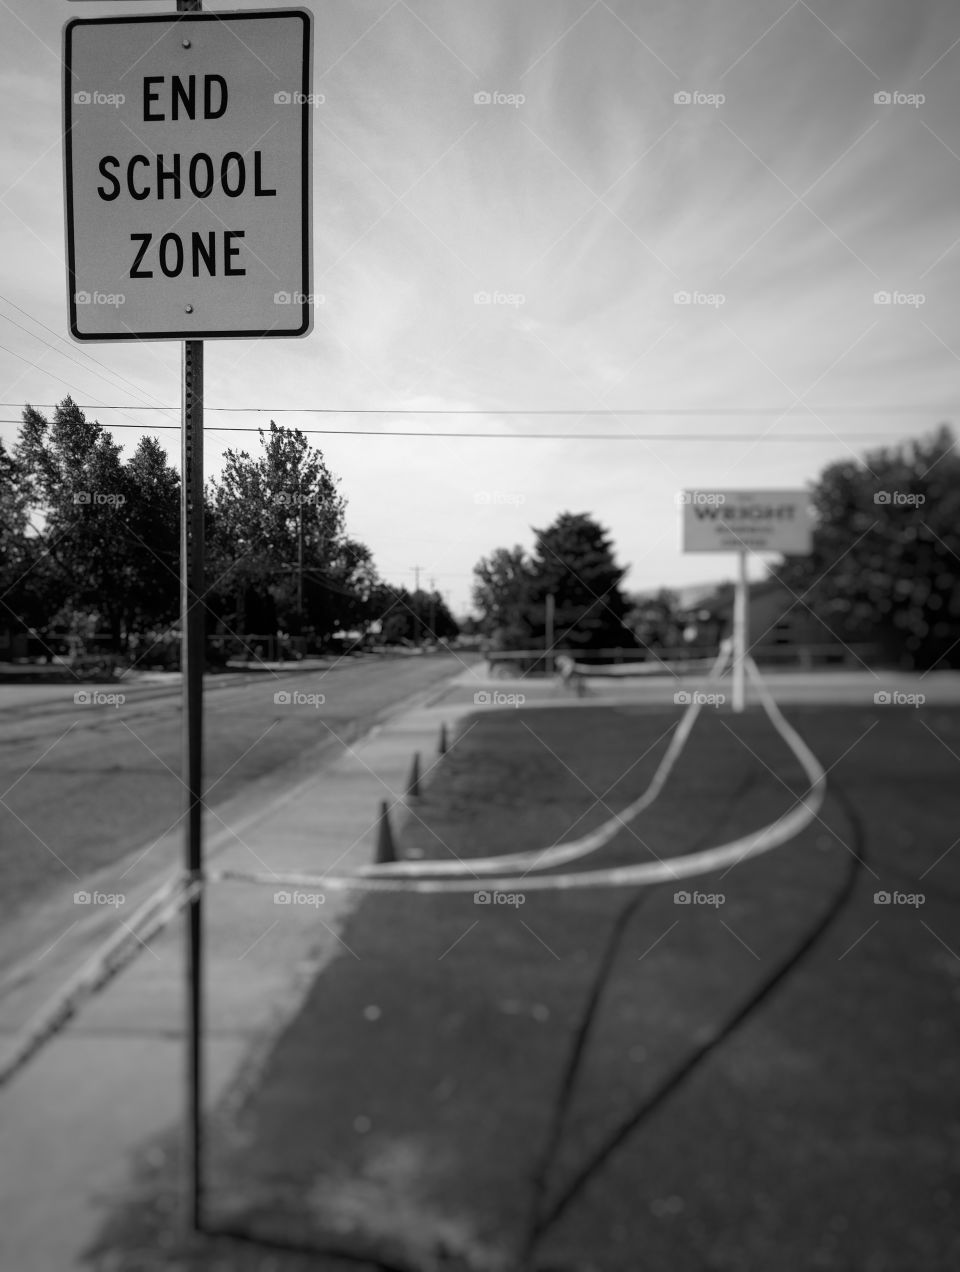 Caution: End School Zone